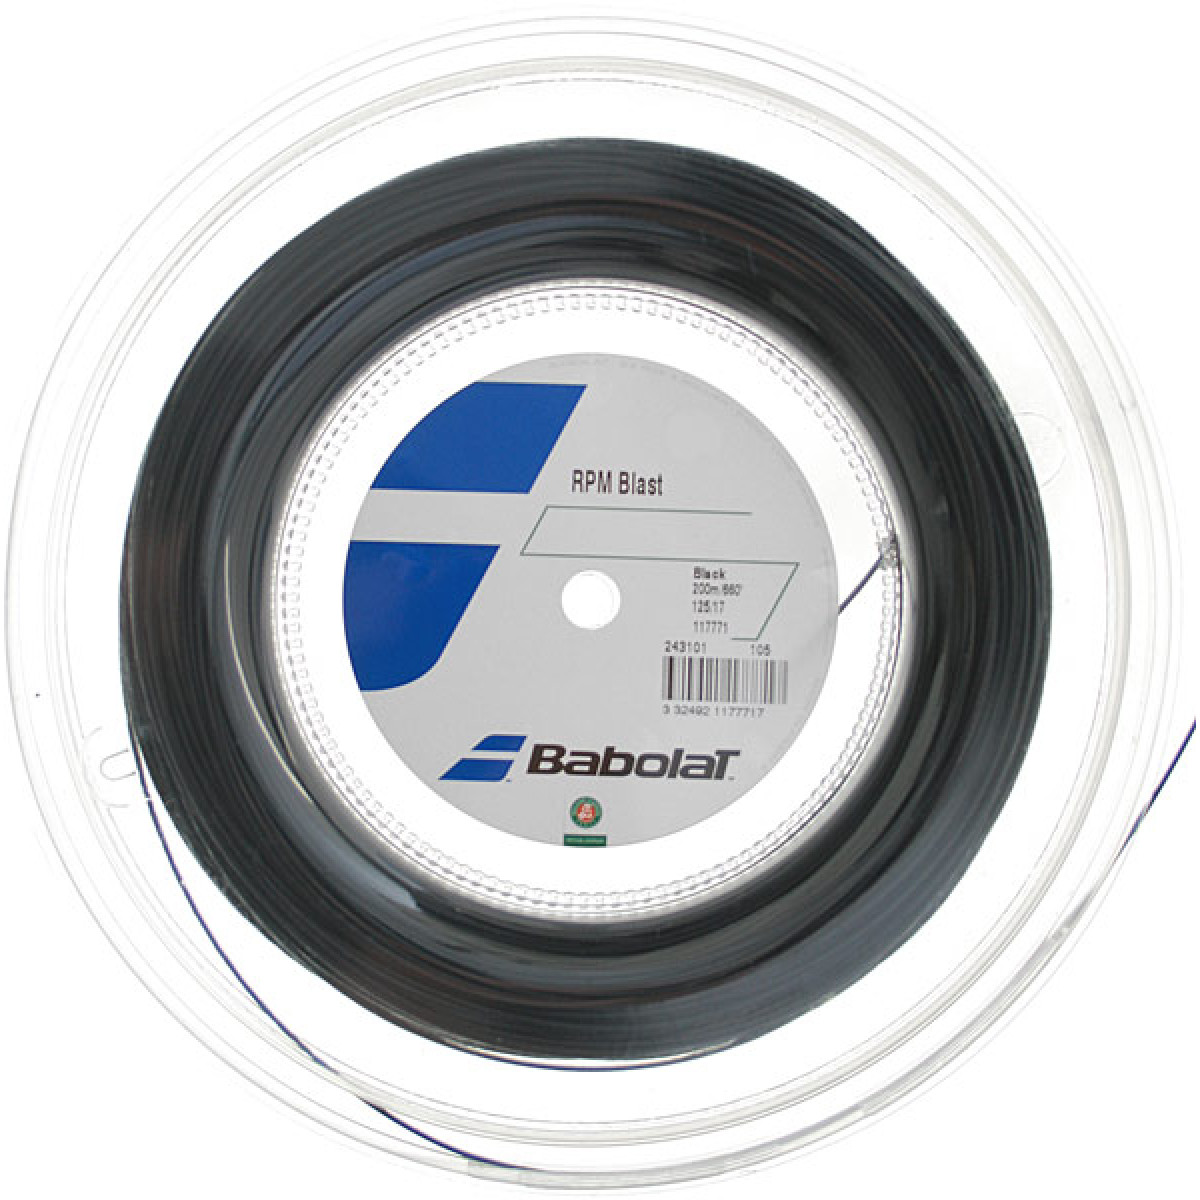 BABOLAT RPM BLAST (200 METERS) STRING REEL